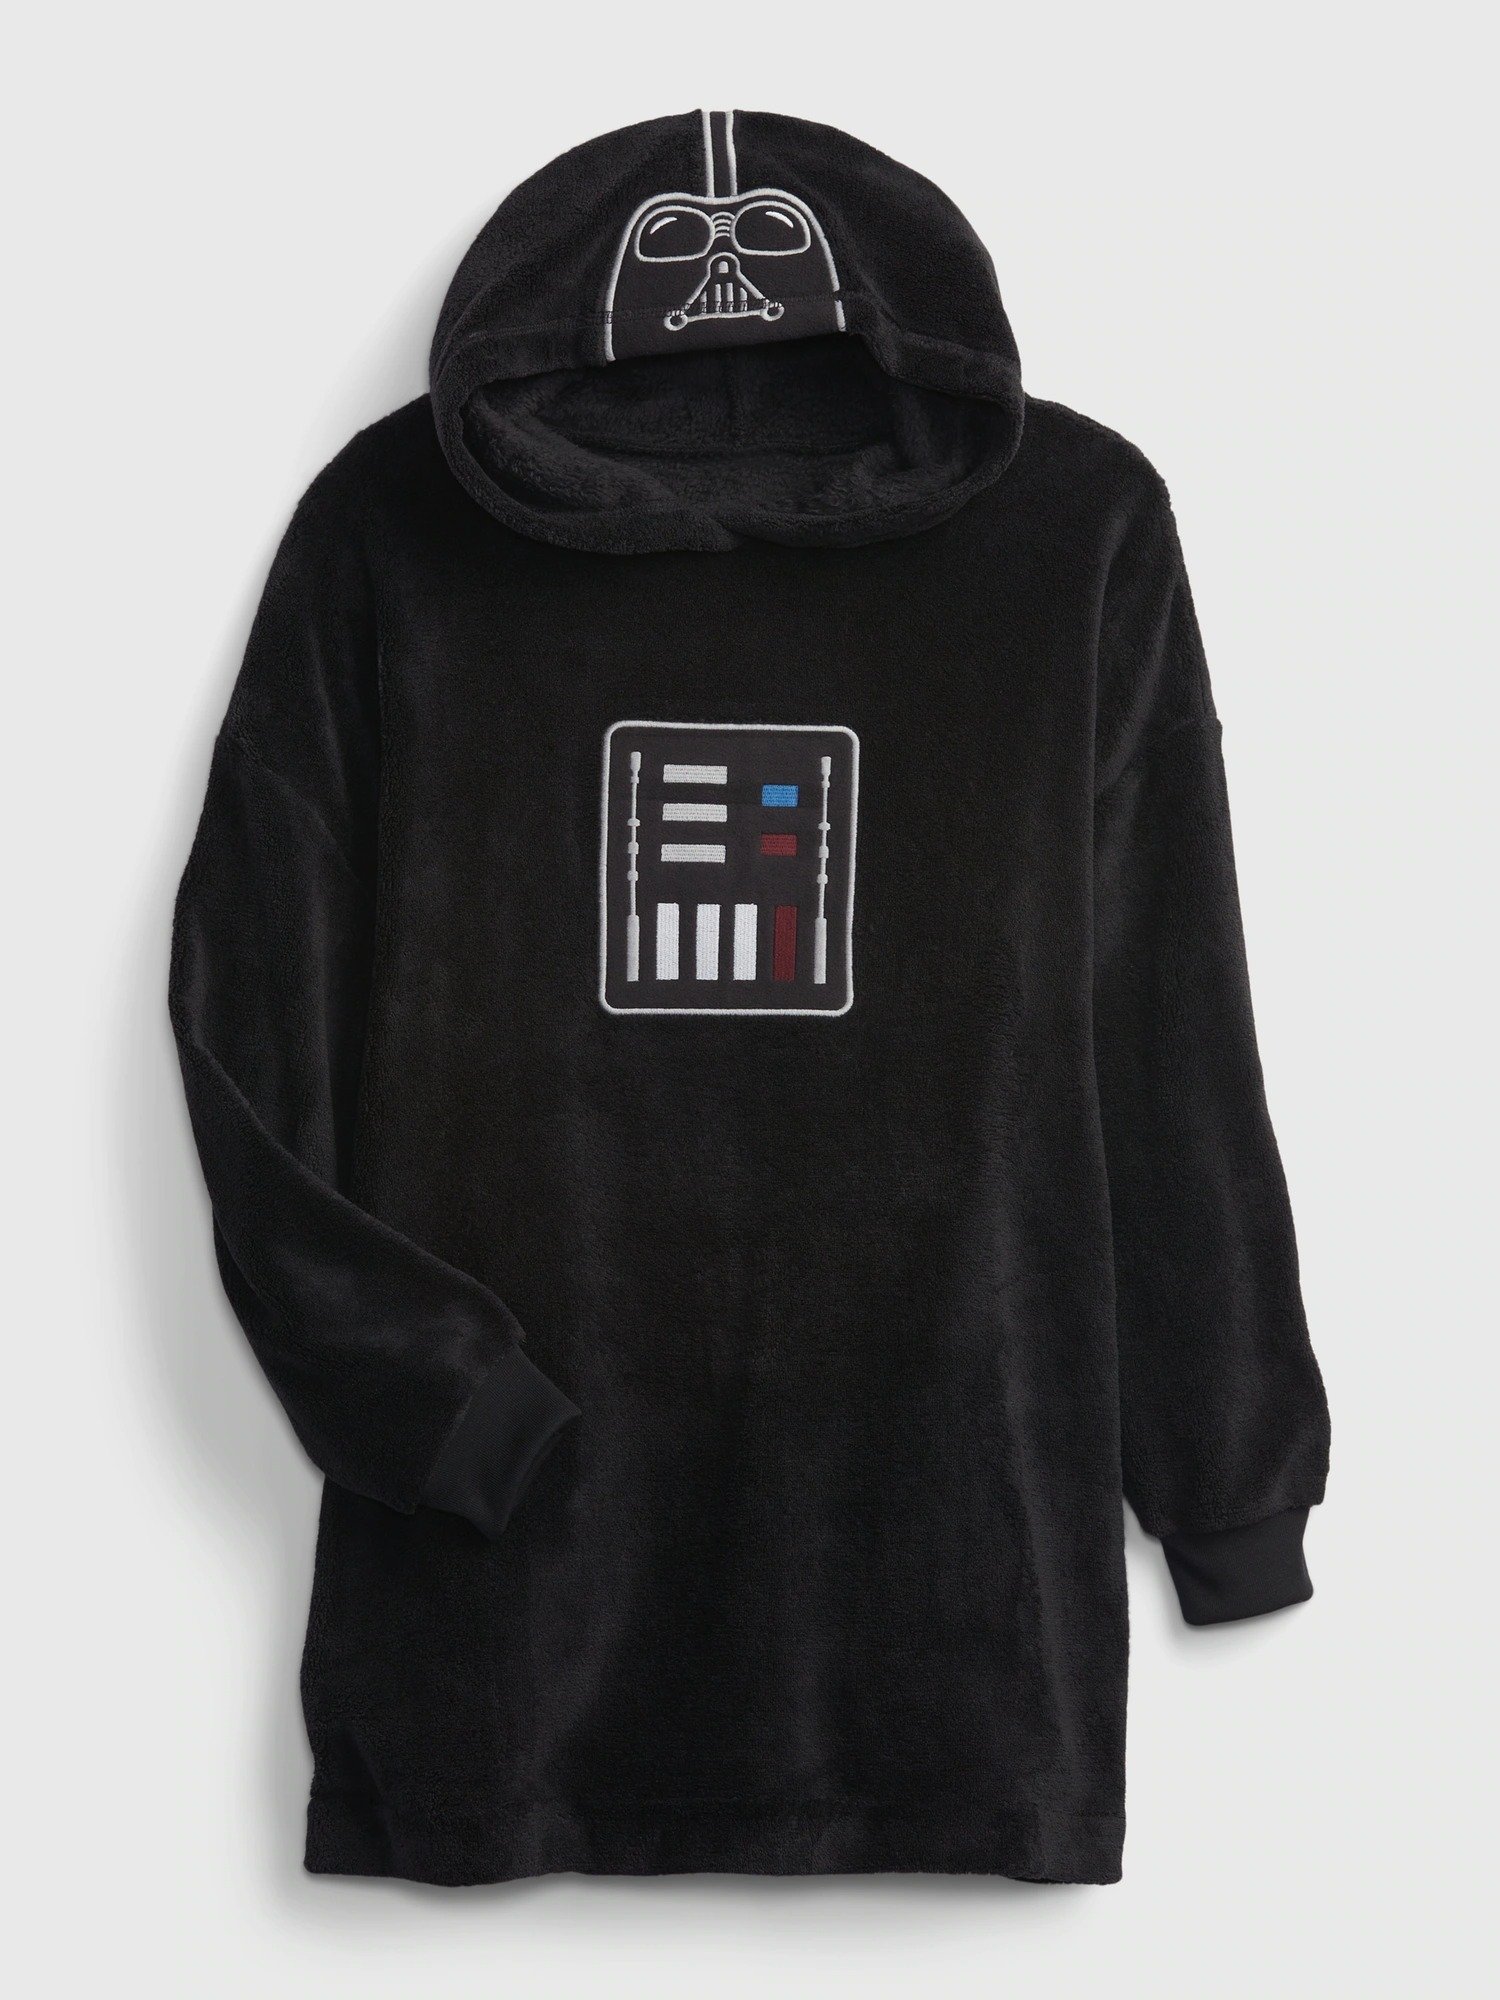 Star Wars™ Darth Vader Grafik Baskılı Pijama Sweatshirt product image